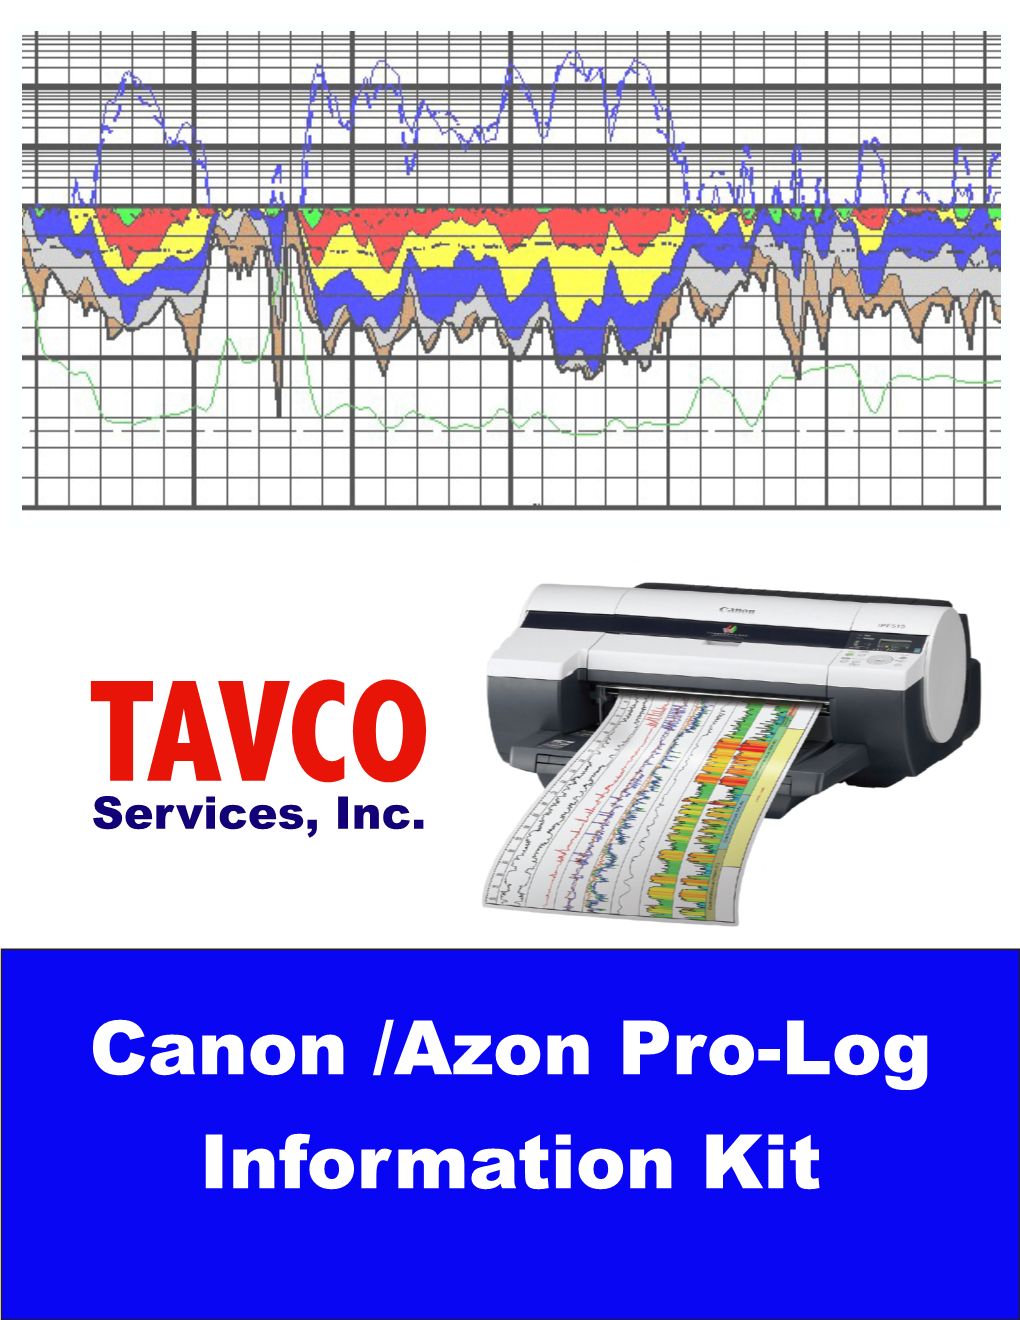 Canon /Azon Pro-Log Information